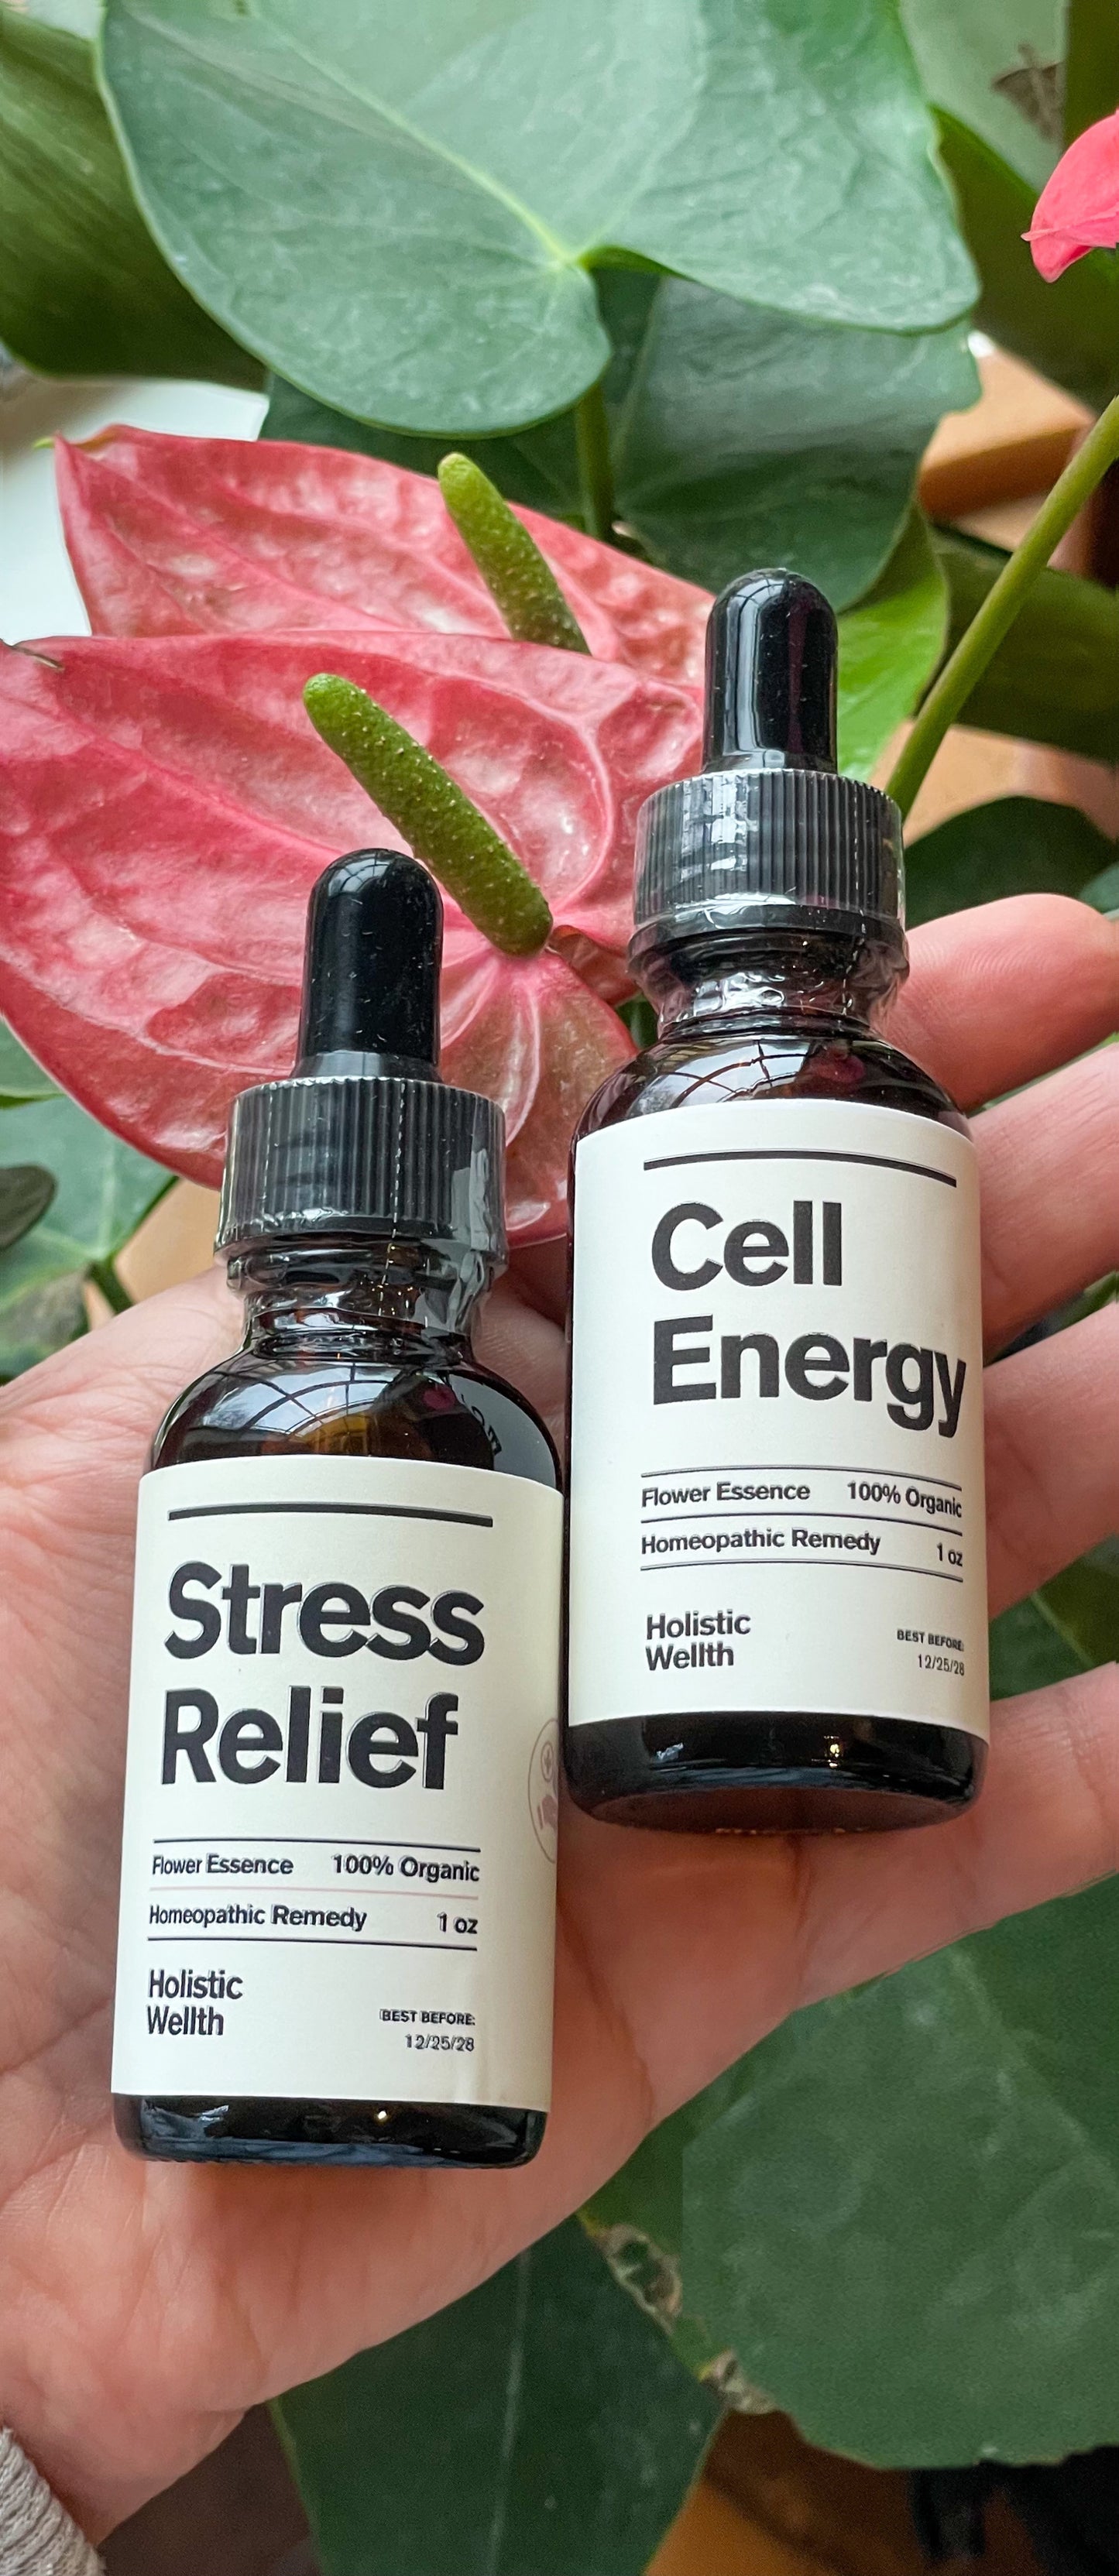 Cell Energy & Stress Relief Flower Essense Remedy